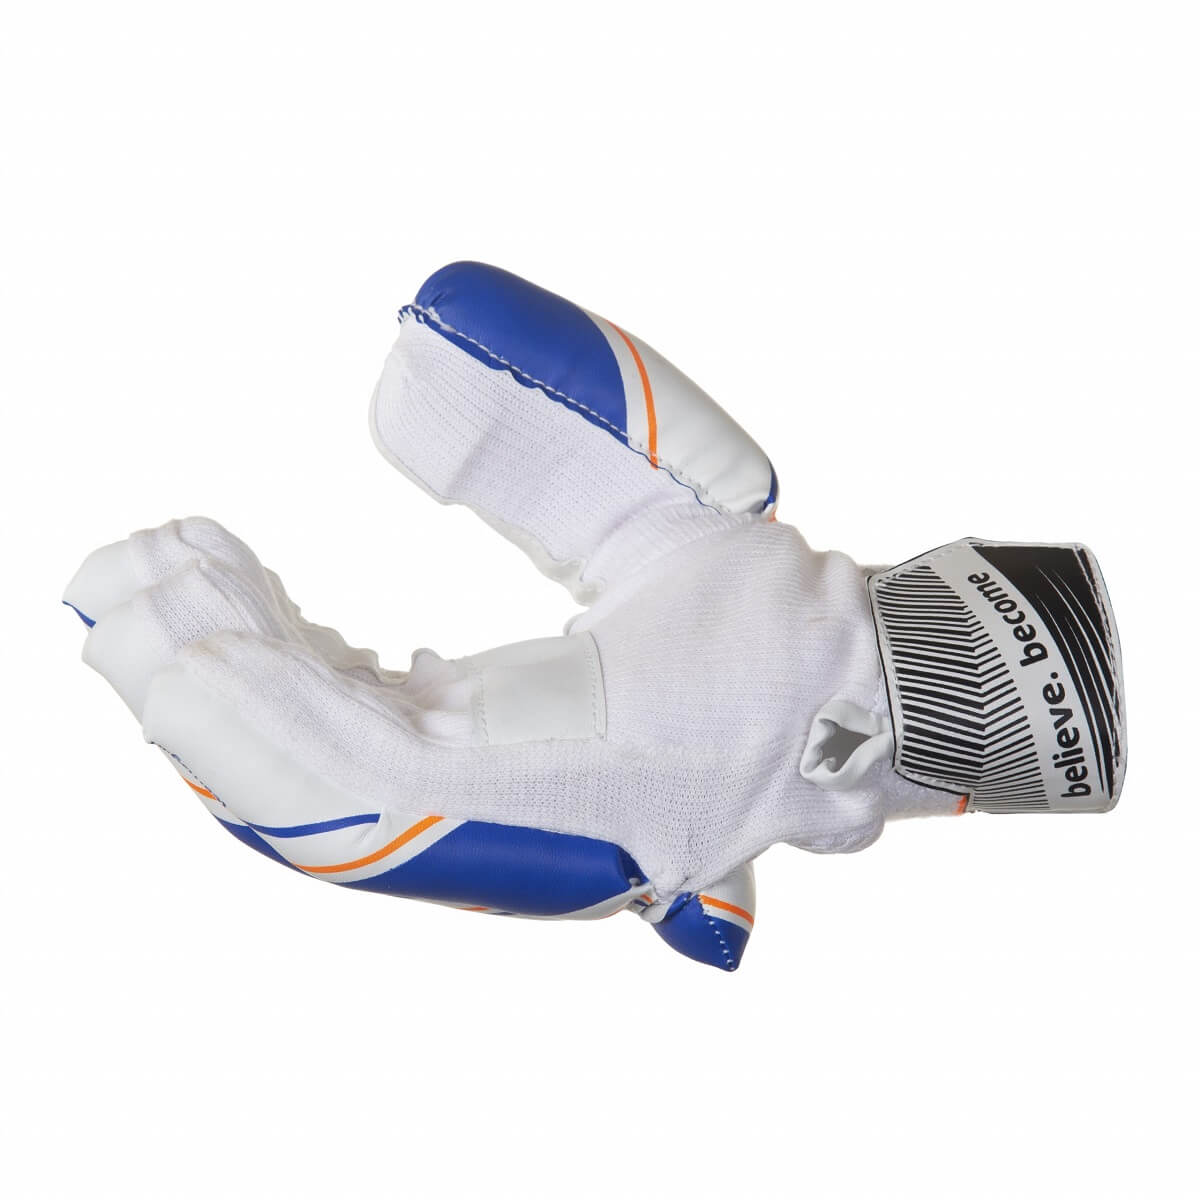 Sears Baseball Glove 1672 Accessories Gloves & Mittens Sports Gloves 